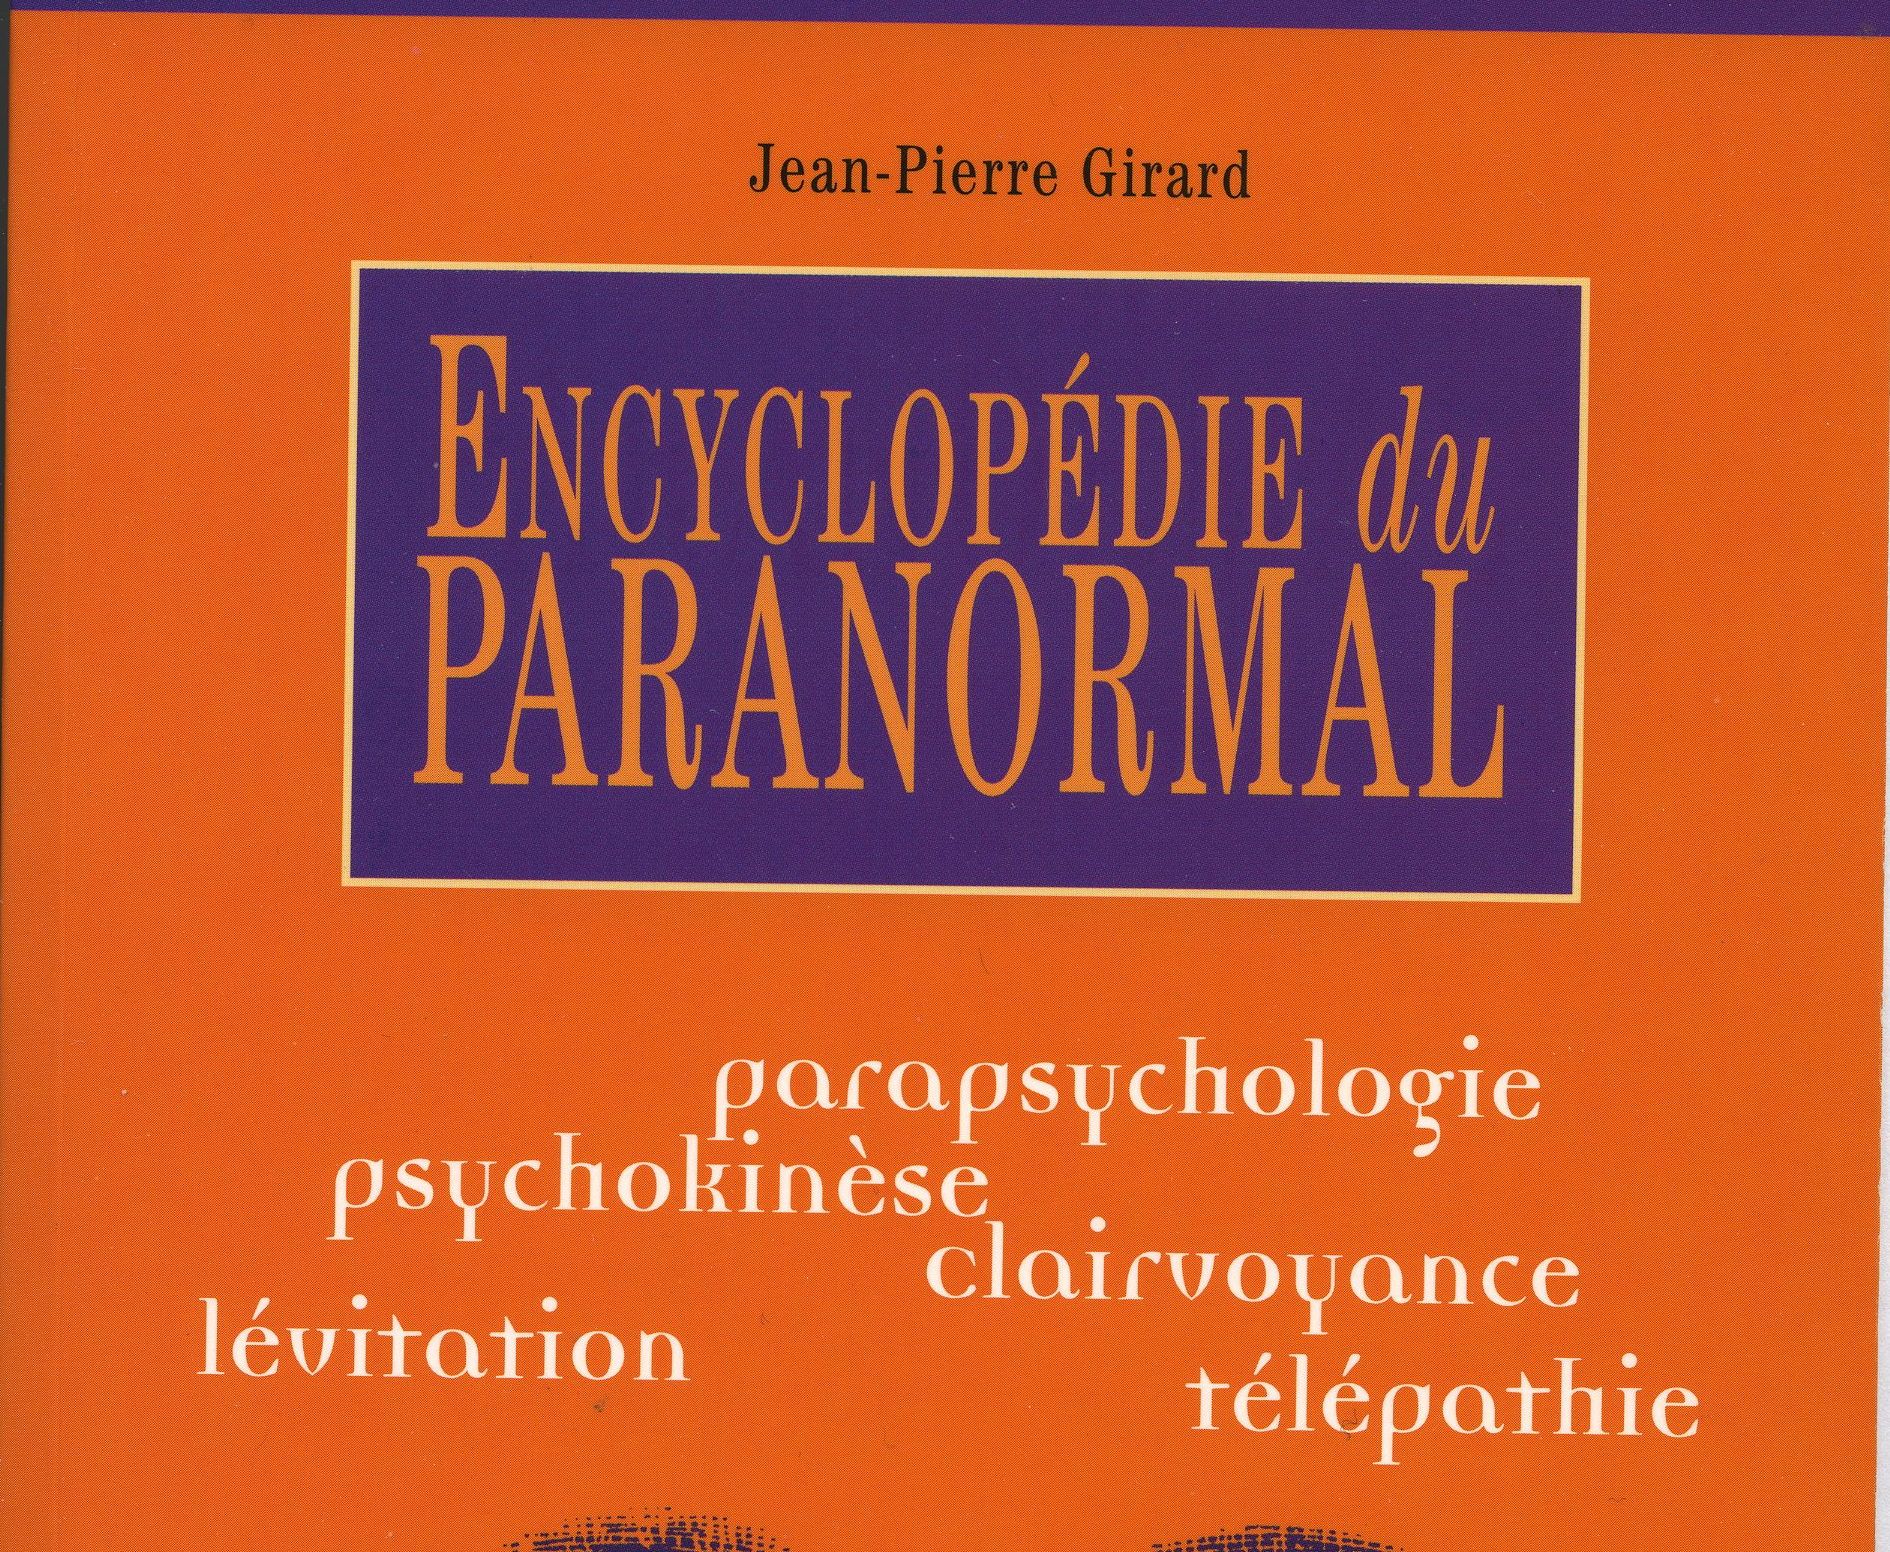 paranormal encyclopedie